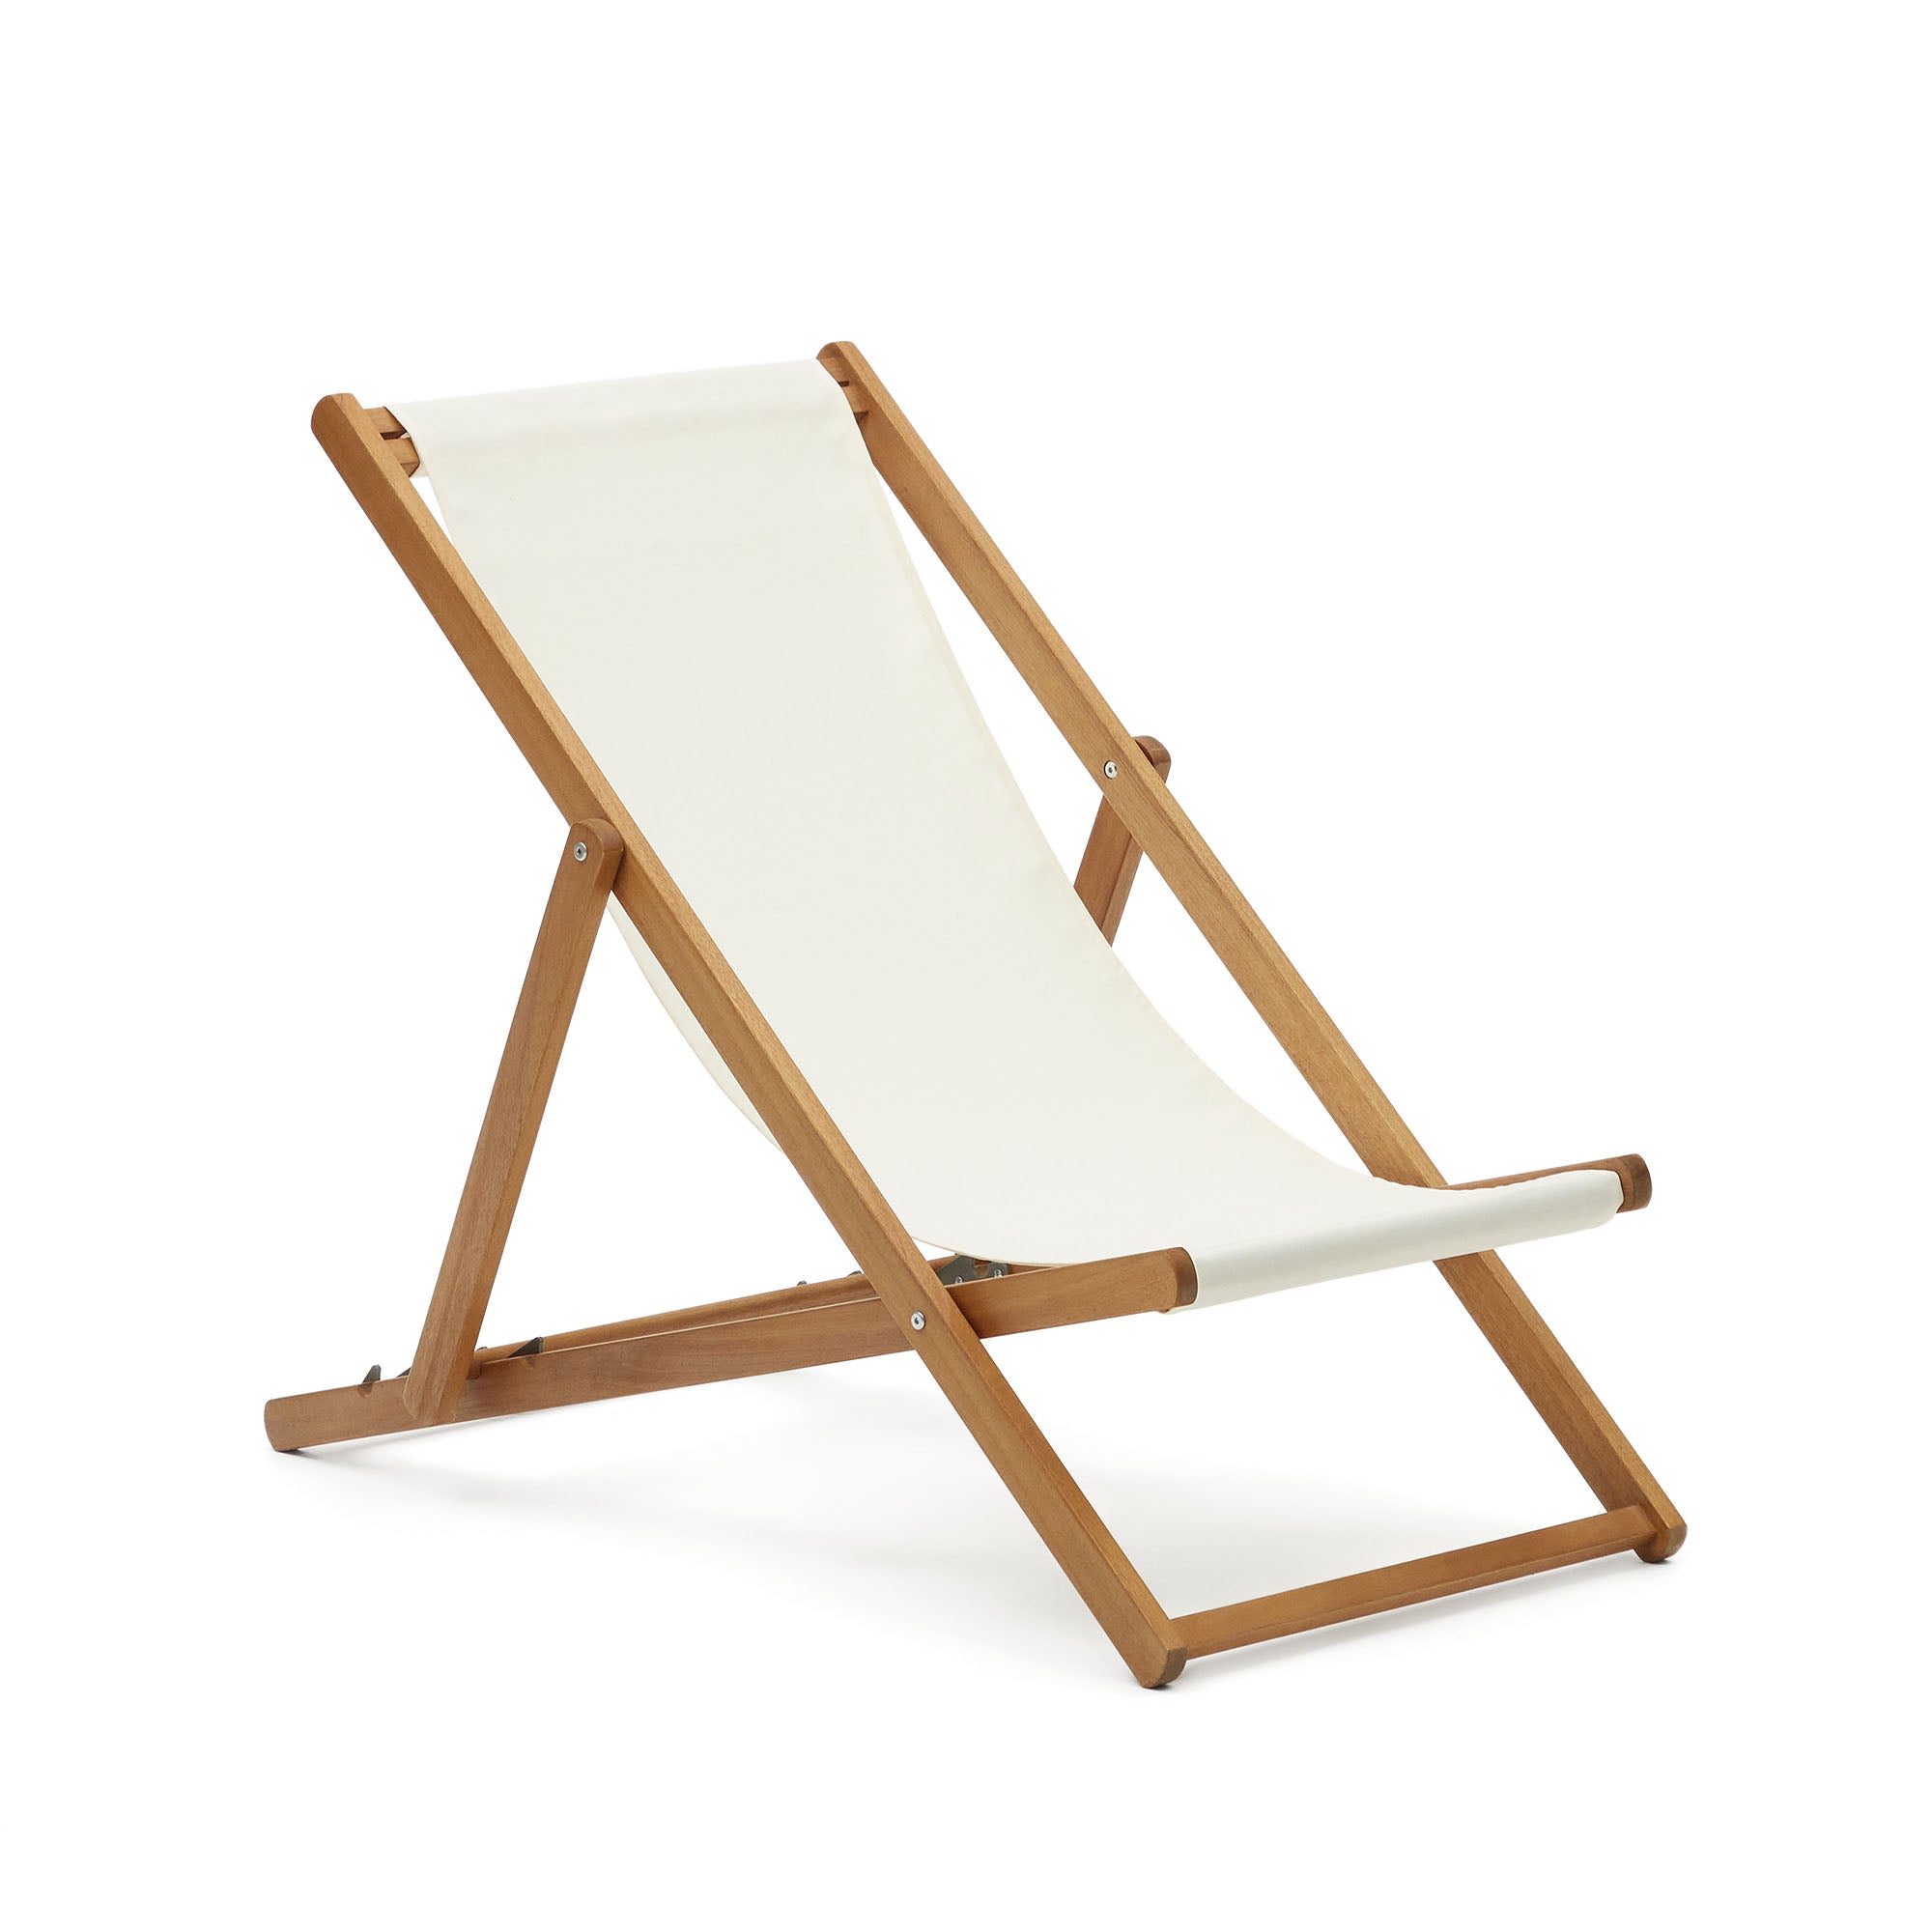 Adredna solid acacia outdoor deck chair in beige FSC 100%